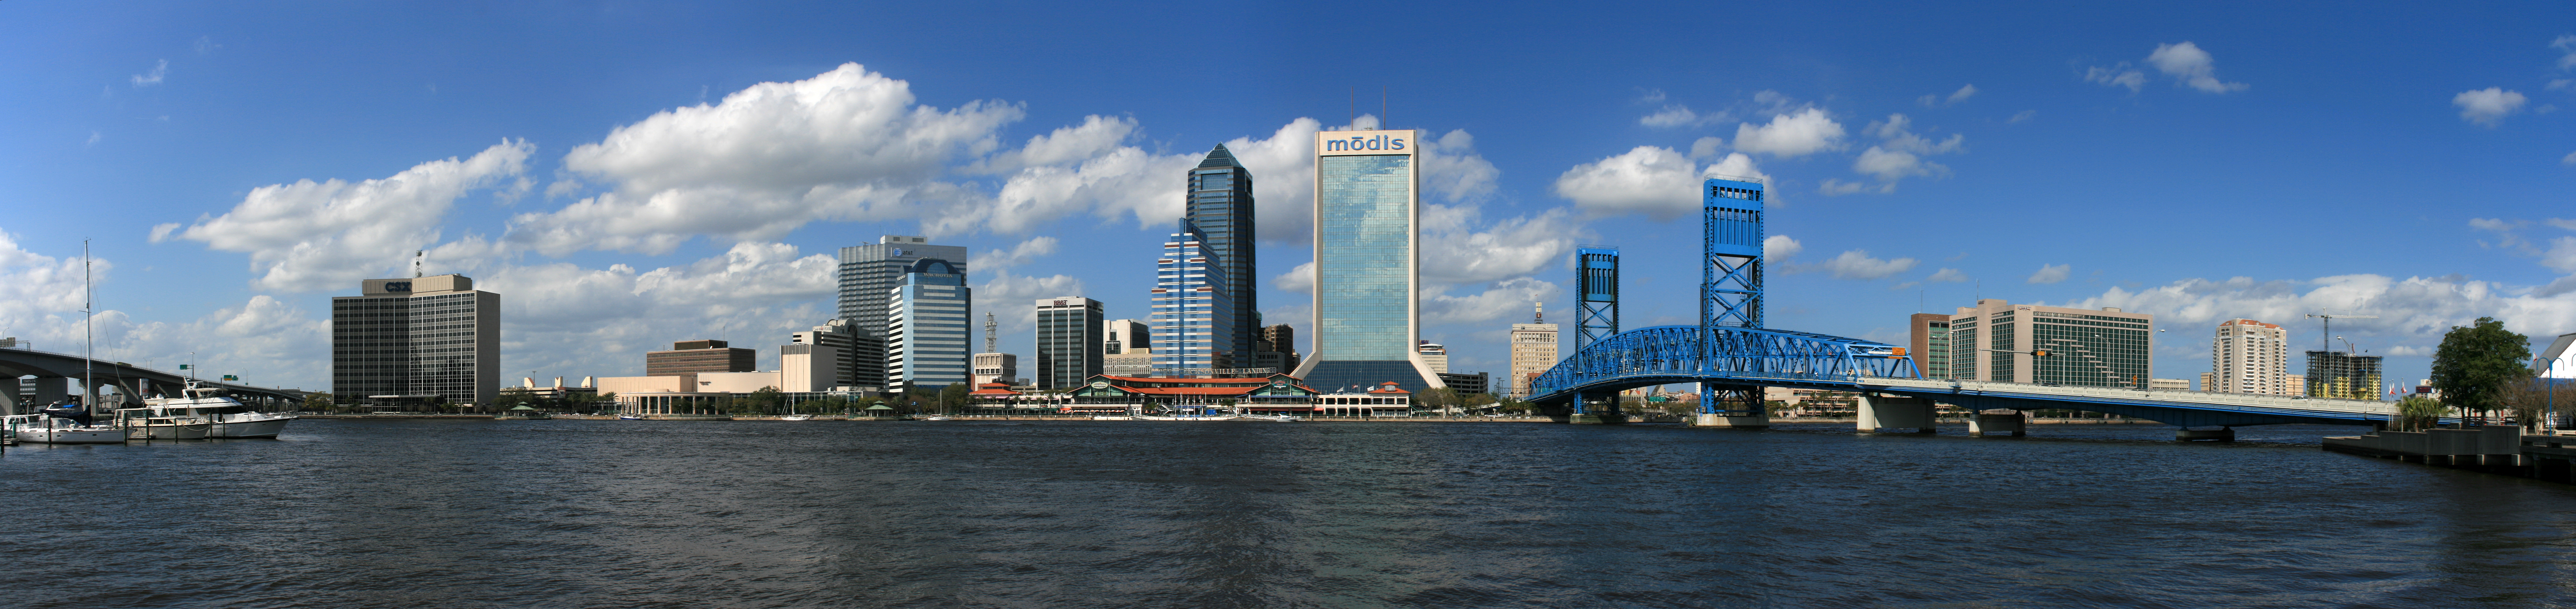 File:Jacksonville Skyline Panorama 5.jpg - Wikimedia Commons